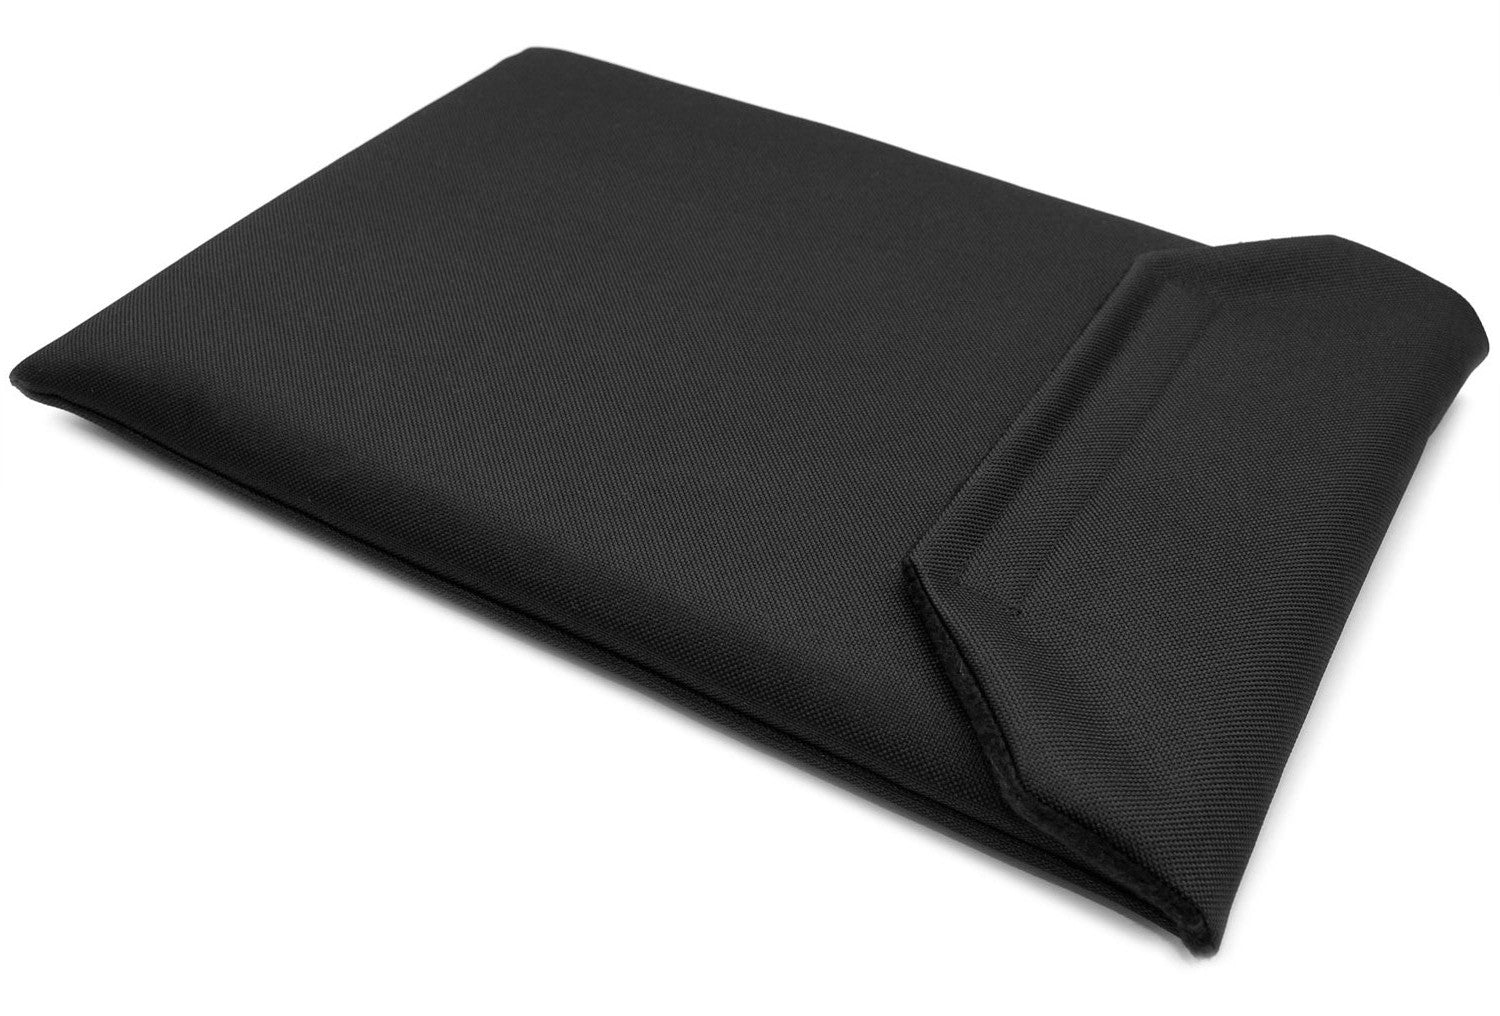 Dell Inspiron 14 7000 Sleeve Case - Black